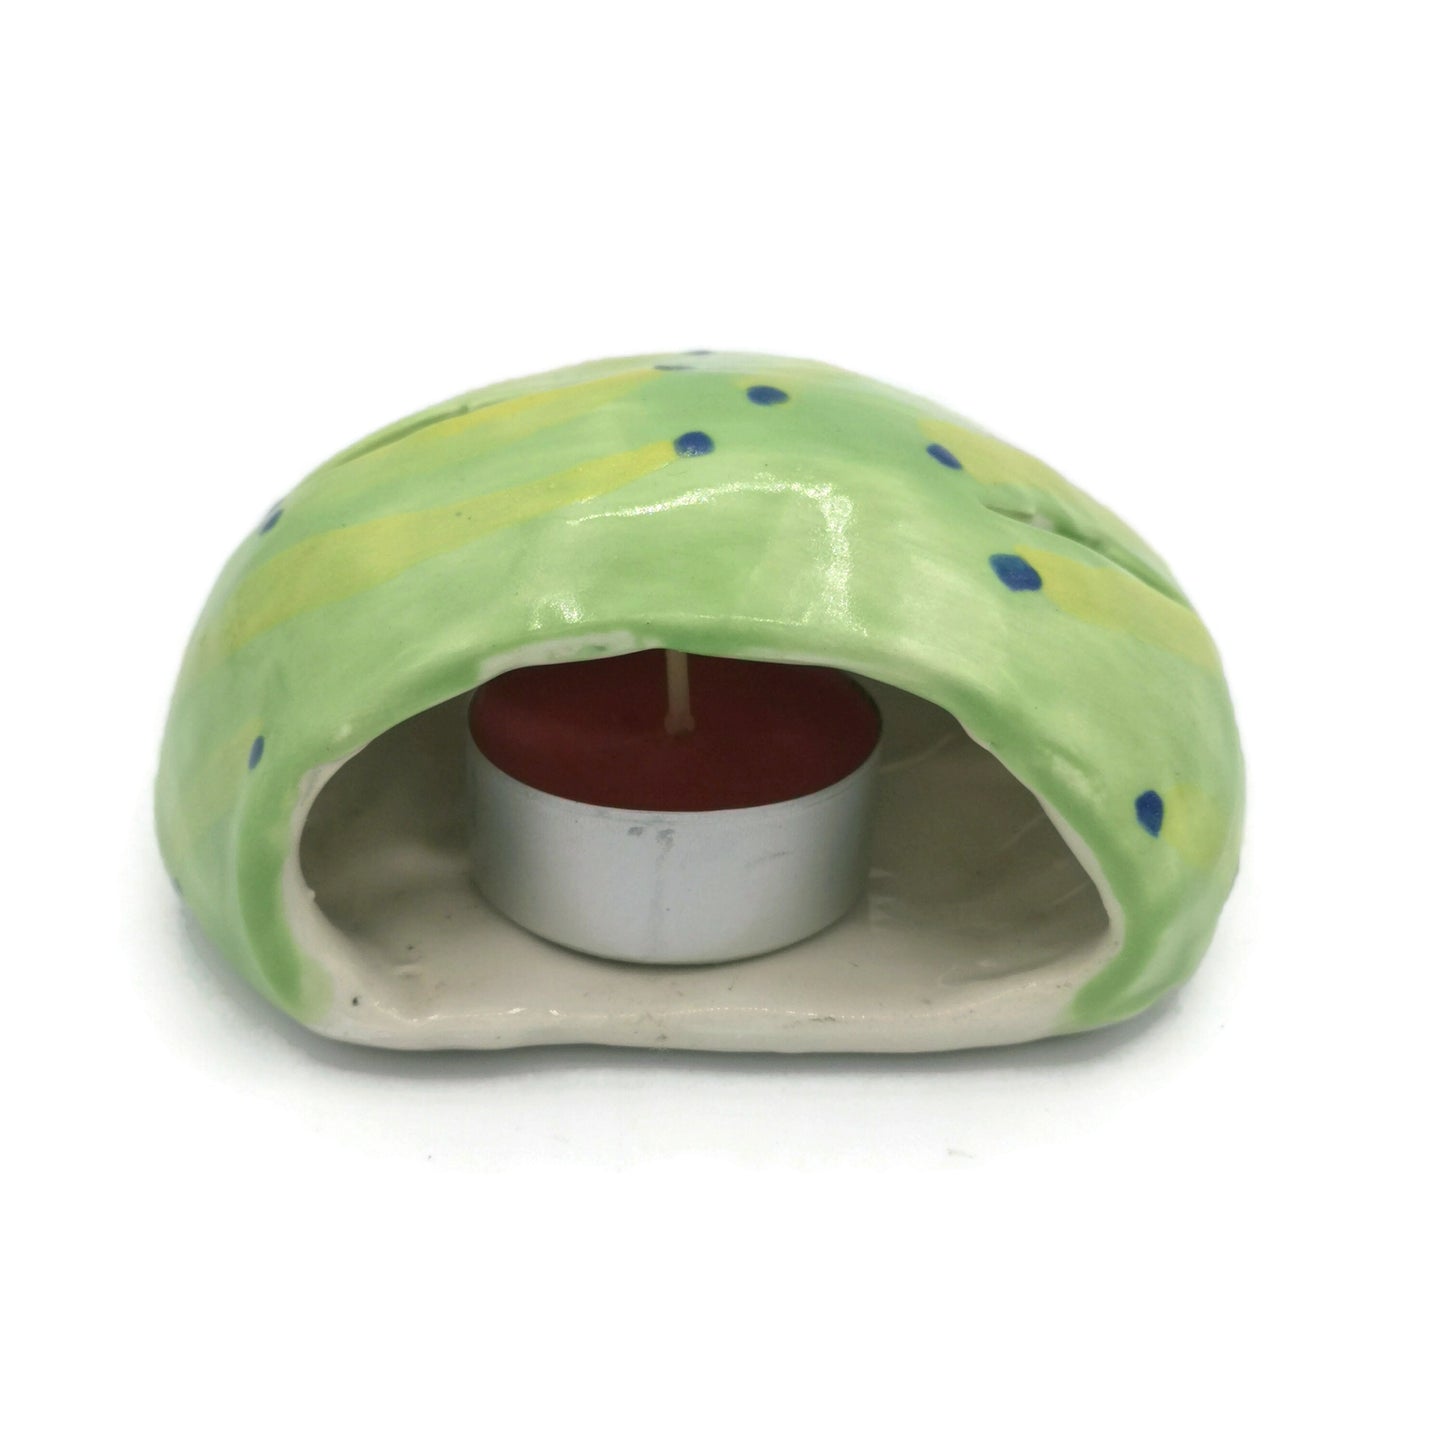 Handmade Ceramic Tea Light Holder Hand Painted Green For Home Decor, Votive Candle Holder, Tealight Holder, Mom Birthday Gift From Daughter - Ceramica Ana Rafael